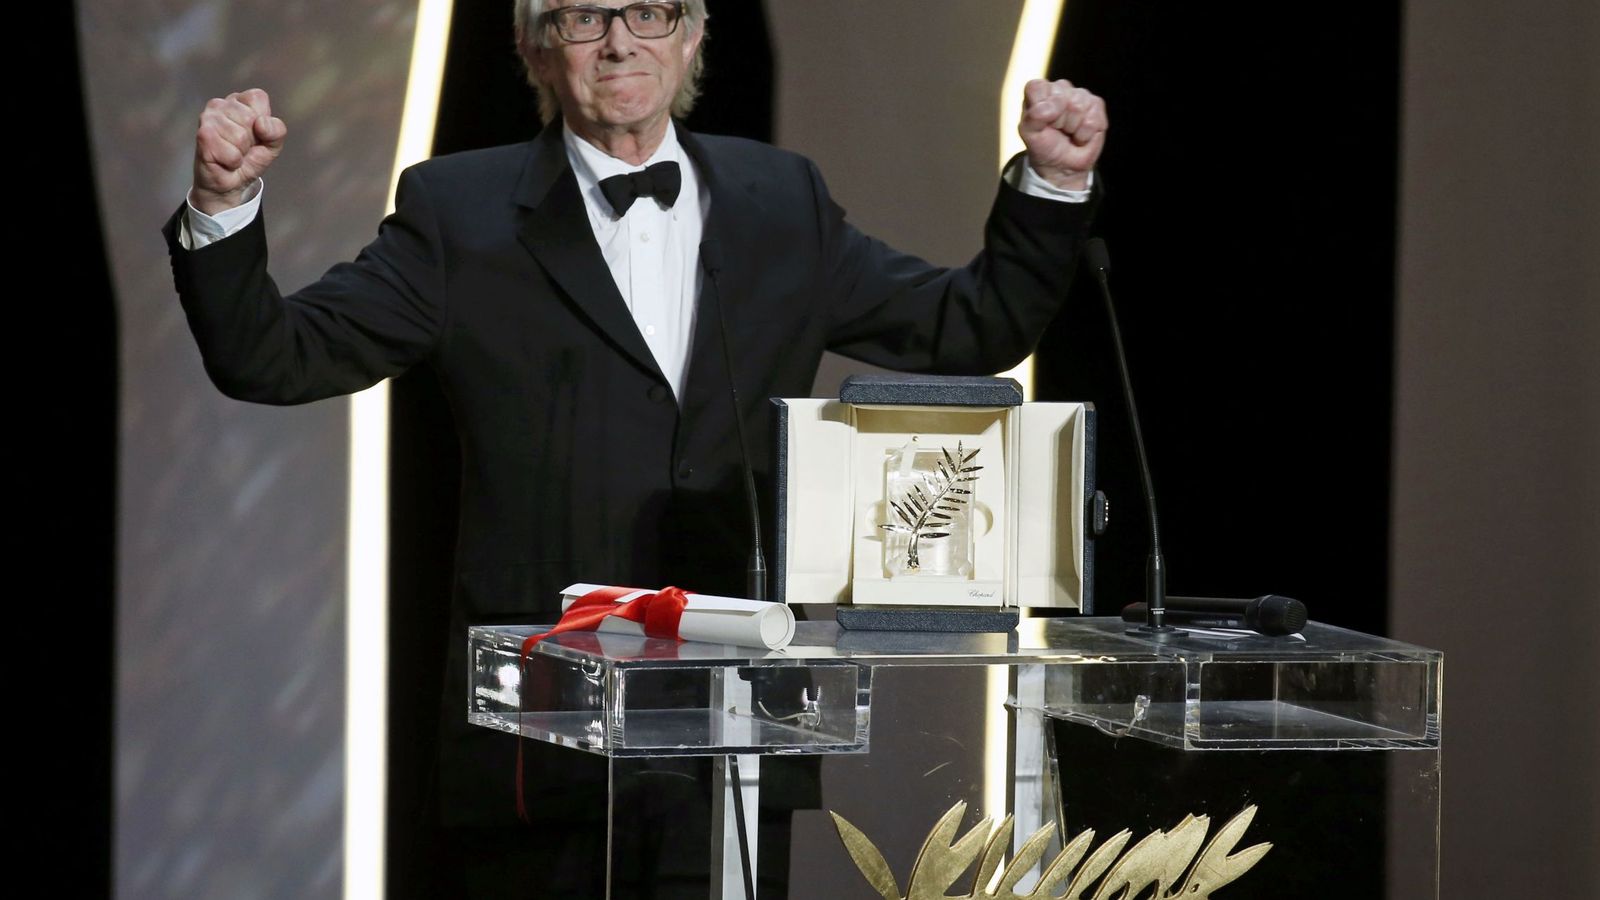 Foto: Ken Loach gana la Palma  de oro en Cannes con "I, Daniel Blake". Foto: Eric Gaillard/Reuters